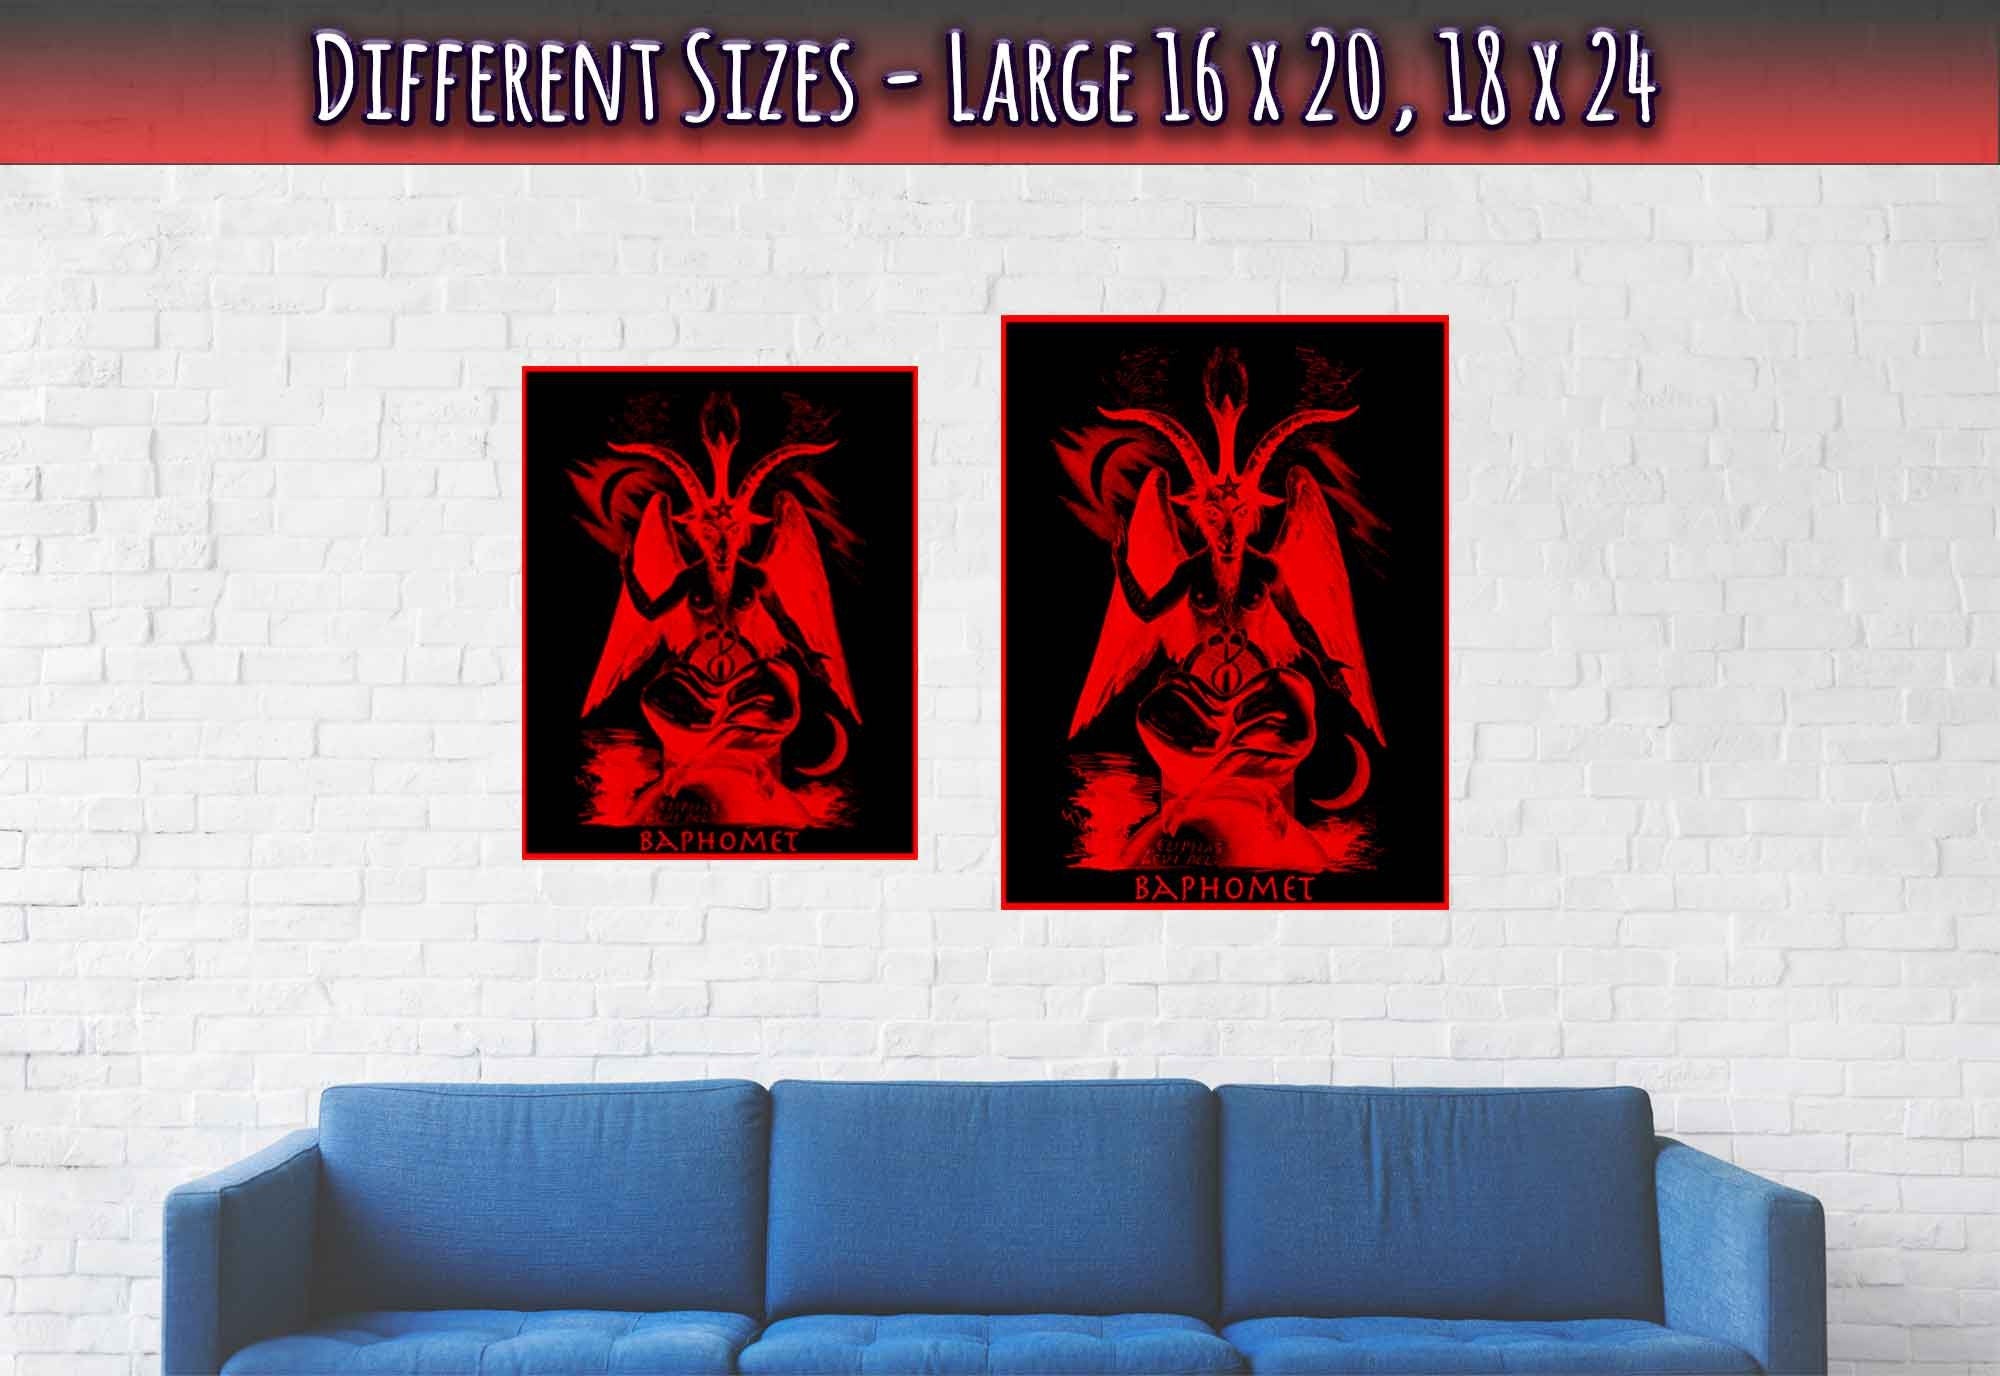 Baphomet Poster, Red Devil Halloween Wall Art, Lucifer Devil Poster - WallArtPrints4U